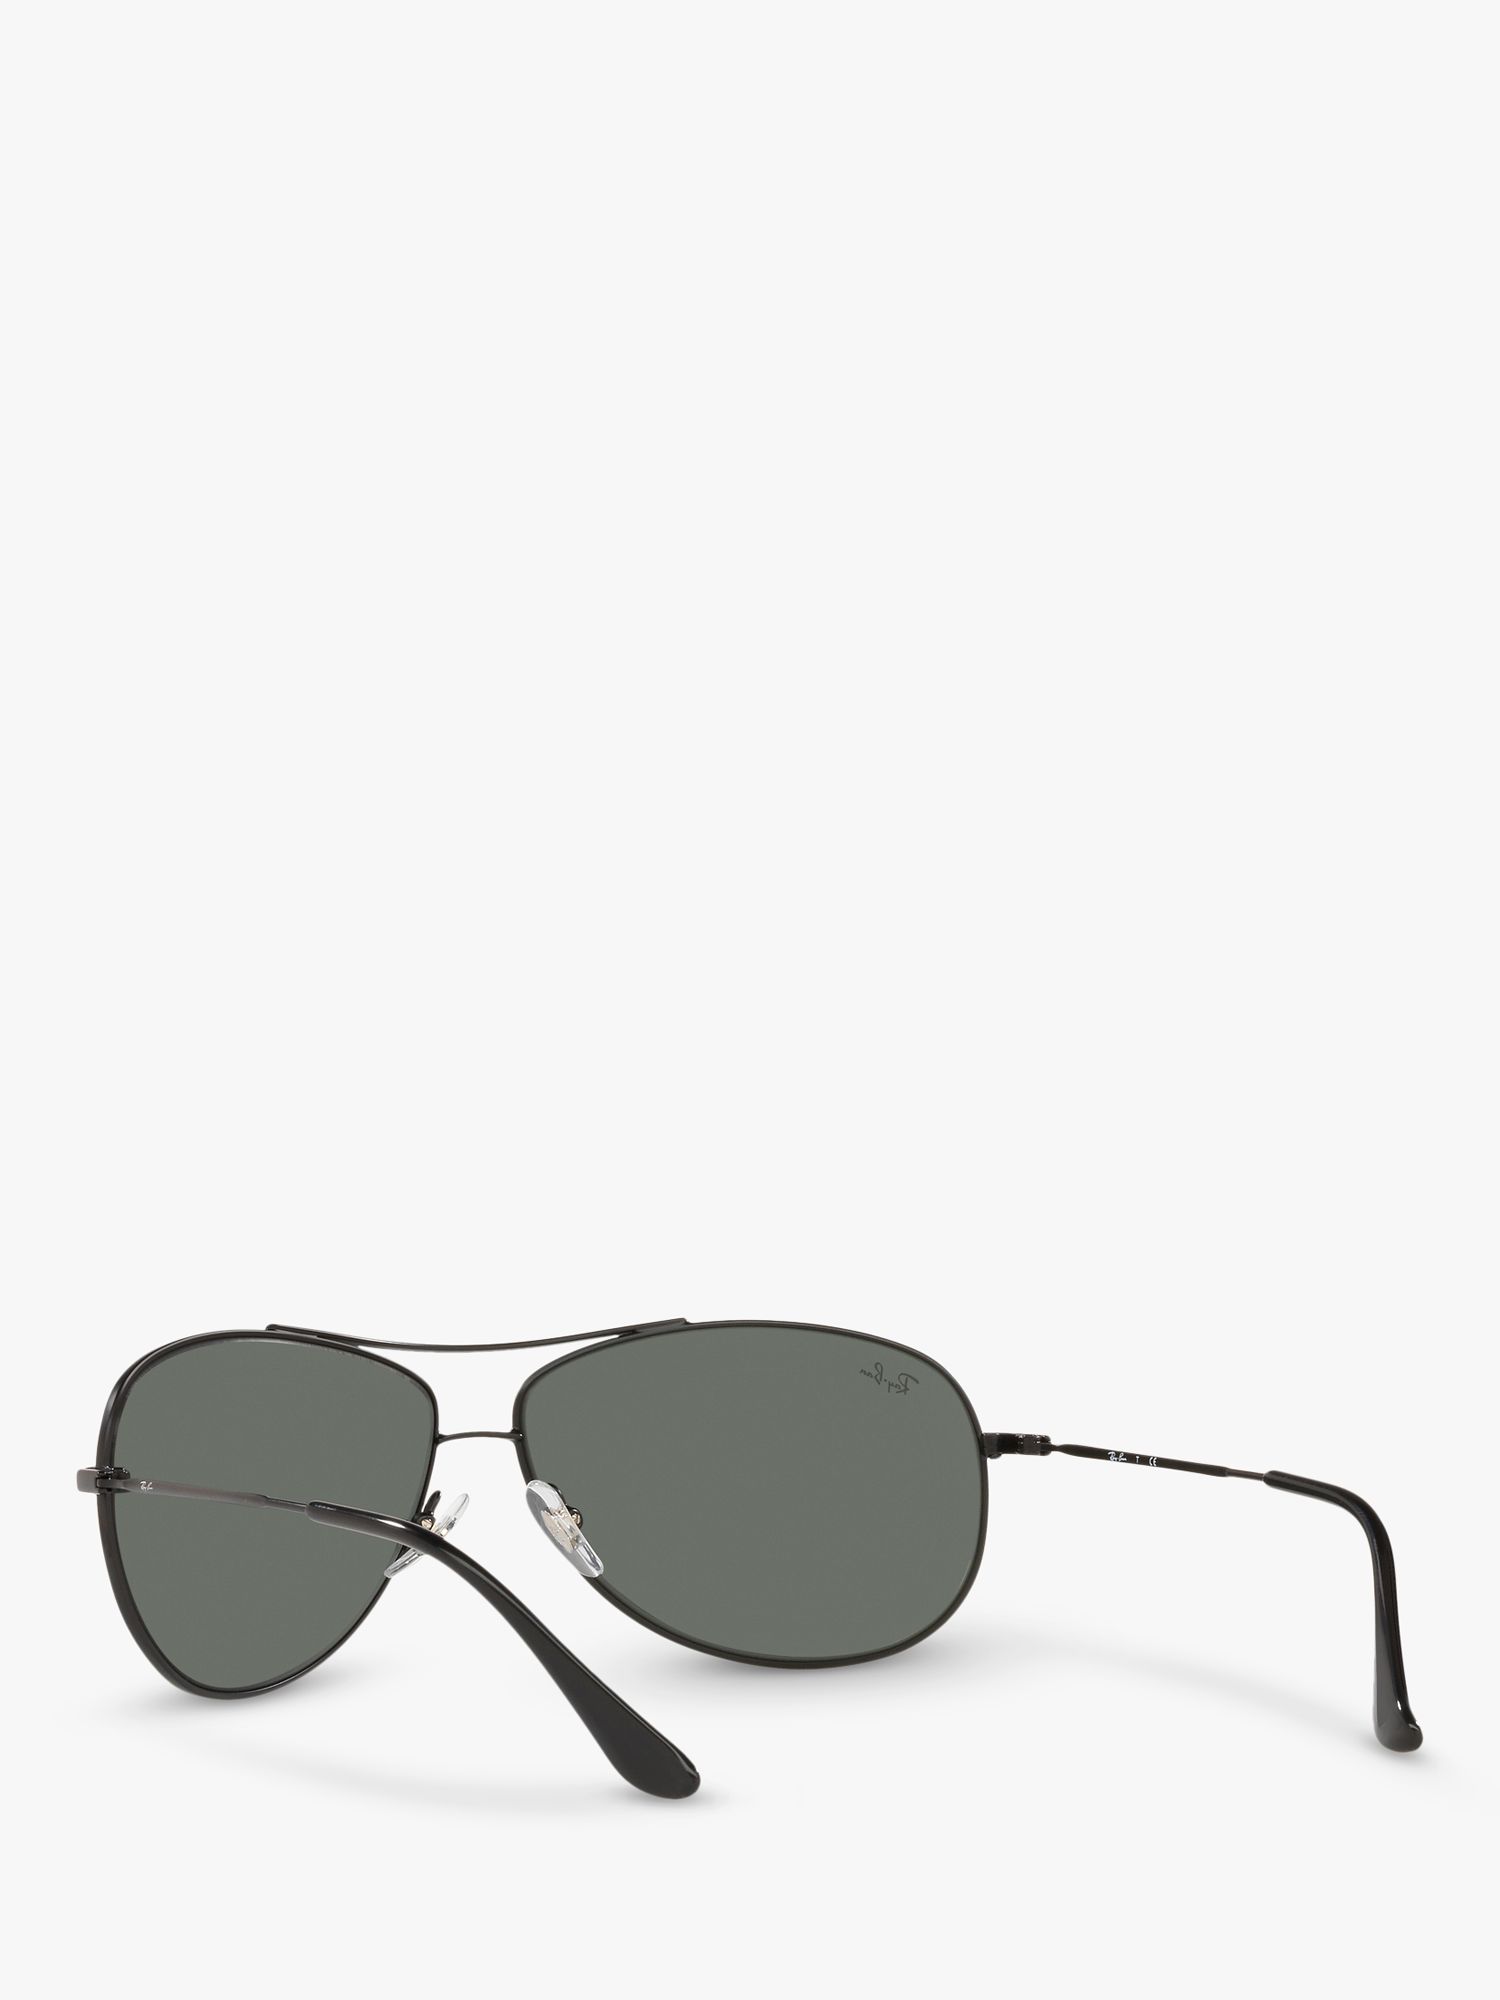 Buy Ray-Ban RB3293 Men's Aviator Sunglasses, Black/Green Online at johnlewis.com